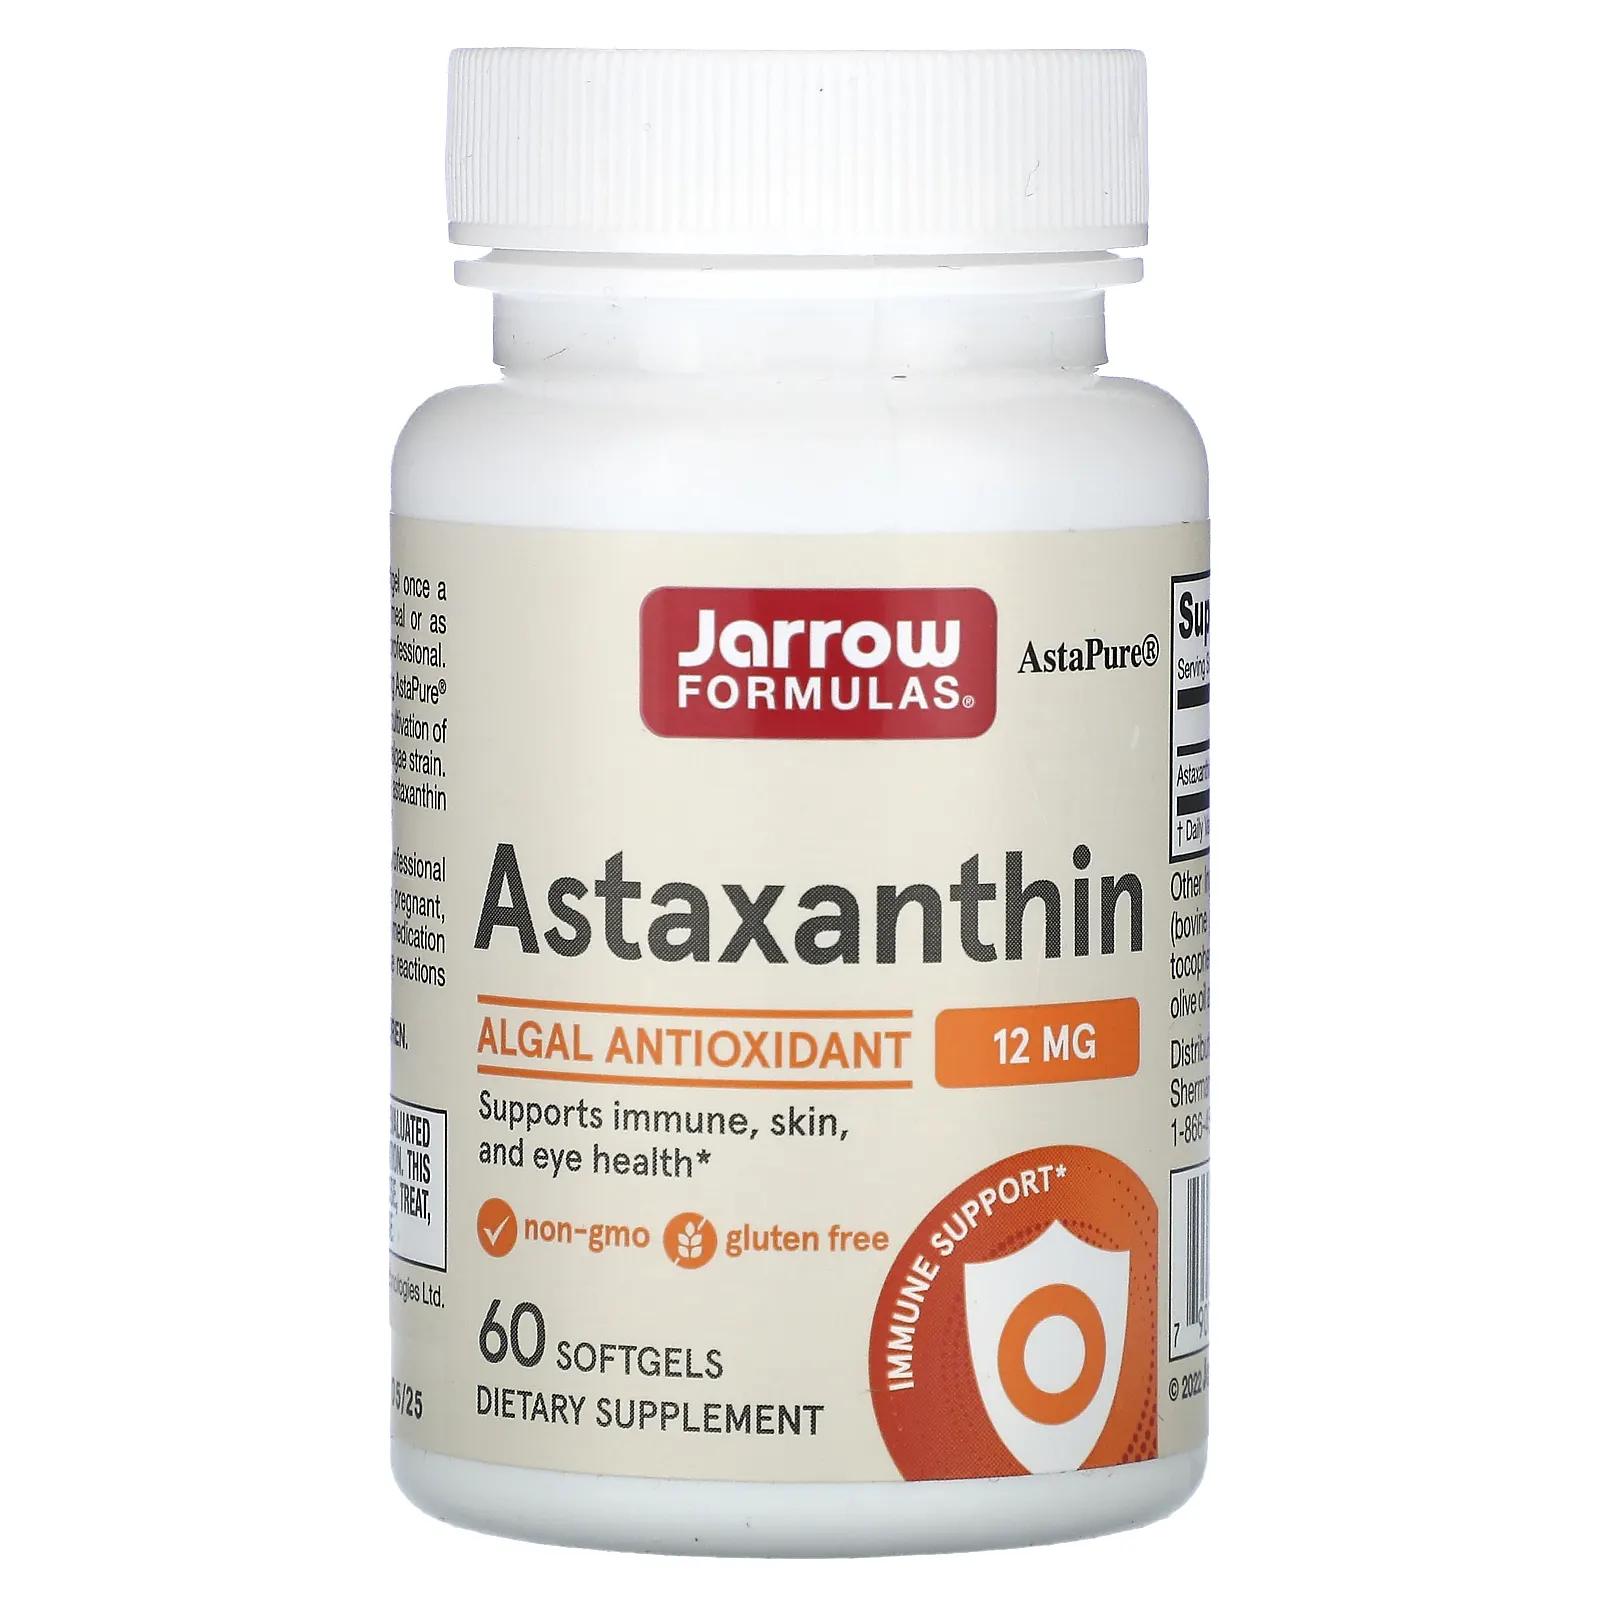 Jarrow Formulas Астаксантин 12 мг 60 мягких желатиновых капсул астаксантин тройной концентрации 12 мг 60 капсул sports research